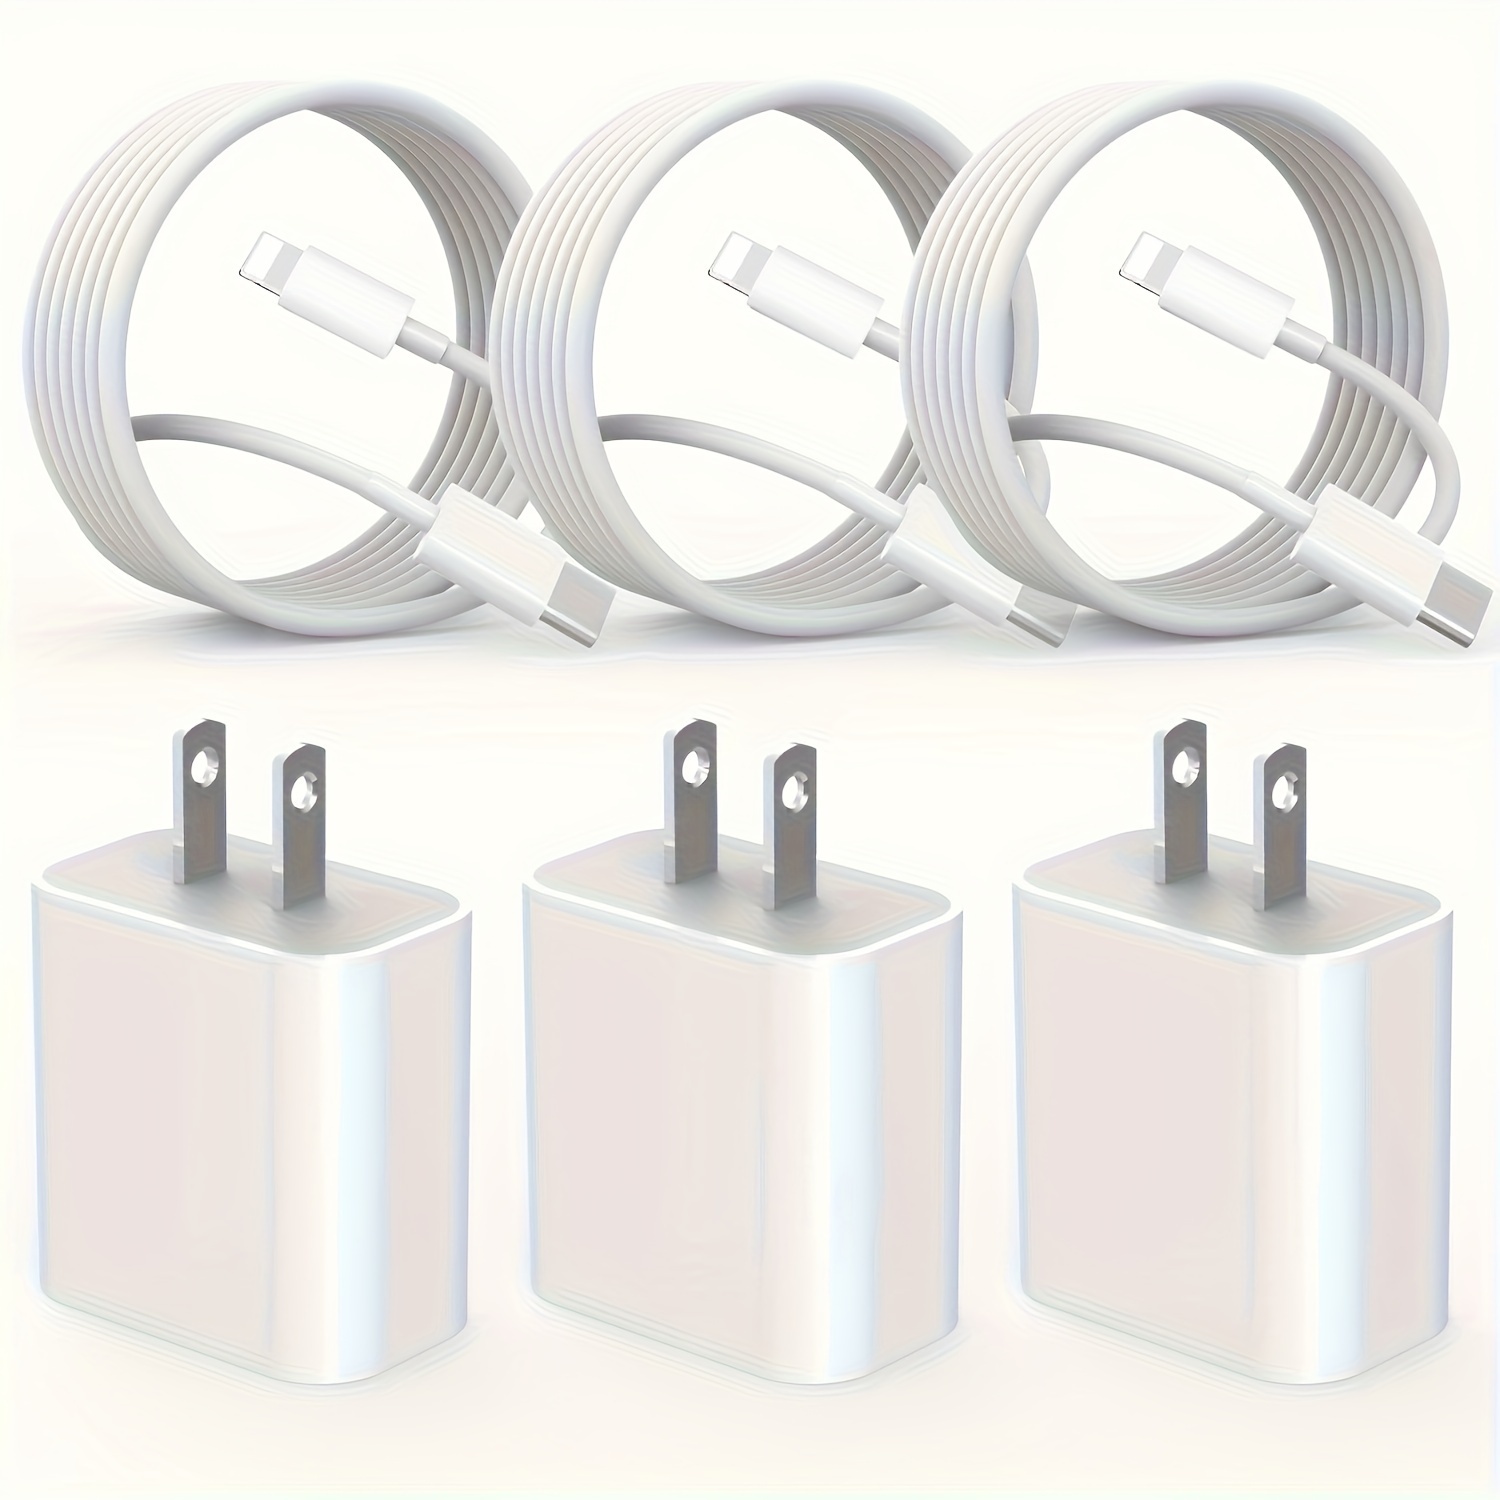 Cargador de iPhone de carga rápida [certificado Apple MFi] 20 W USB C  bloque de carga con cable Lightning tipo C de 6 pies - Cable adaptador PD  de